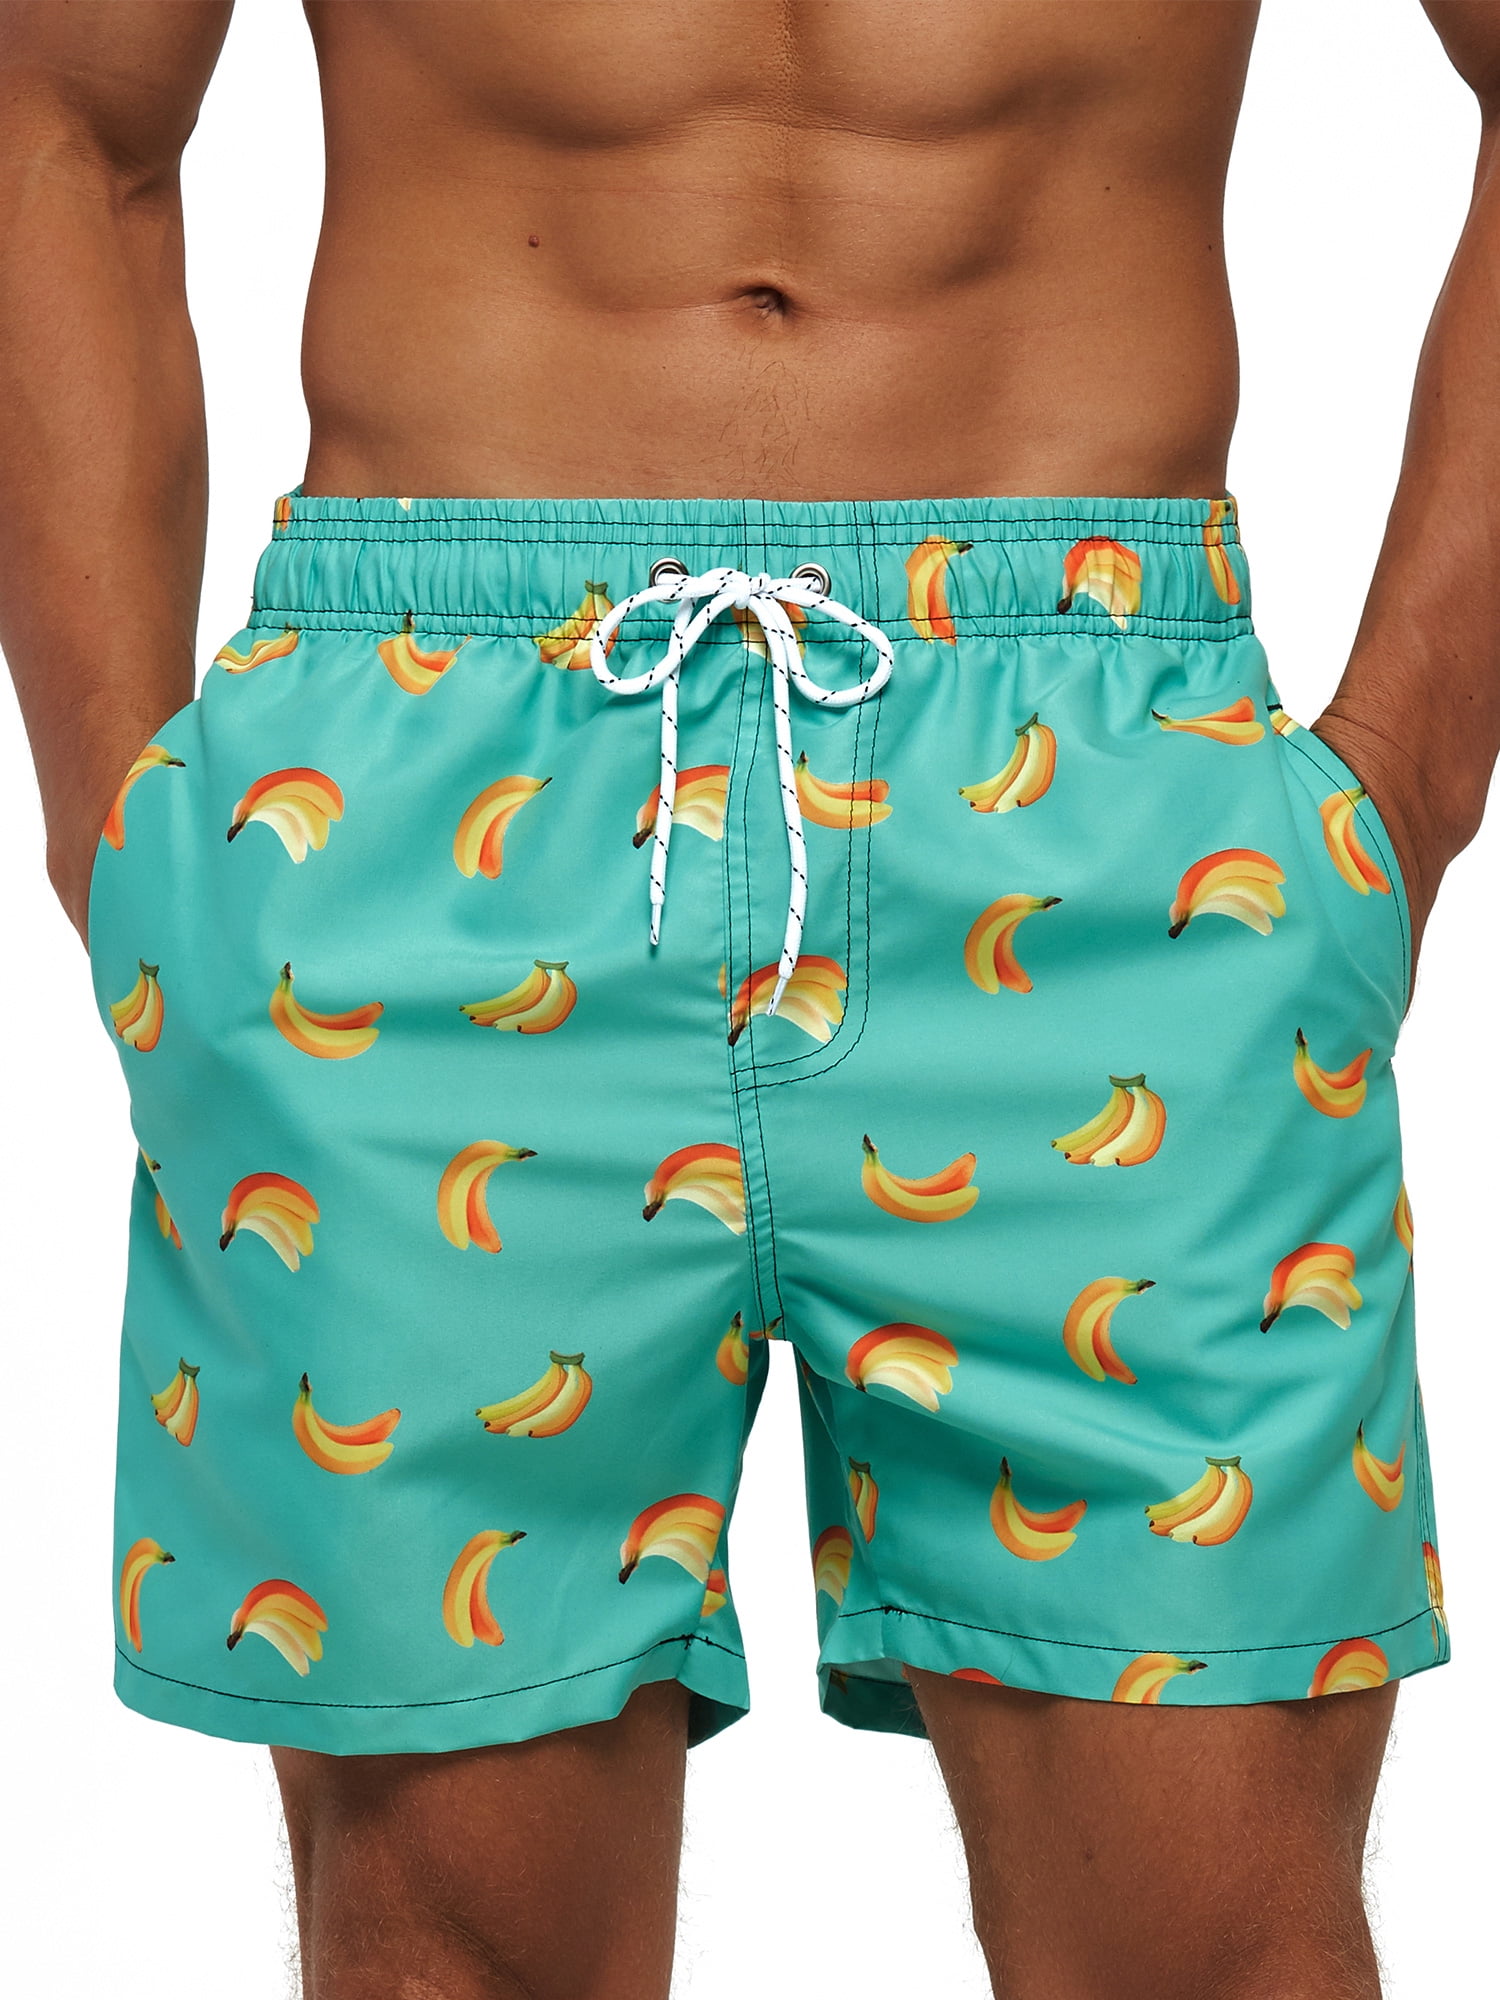 Cartoon Shorts Boy Swimming Trunks Swimwear Summer Beach Pants Cotton Blend New 